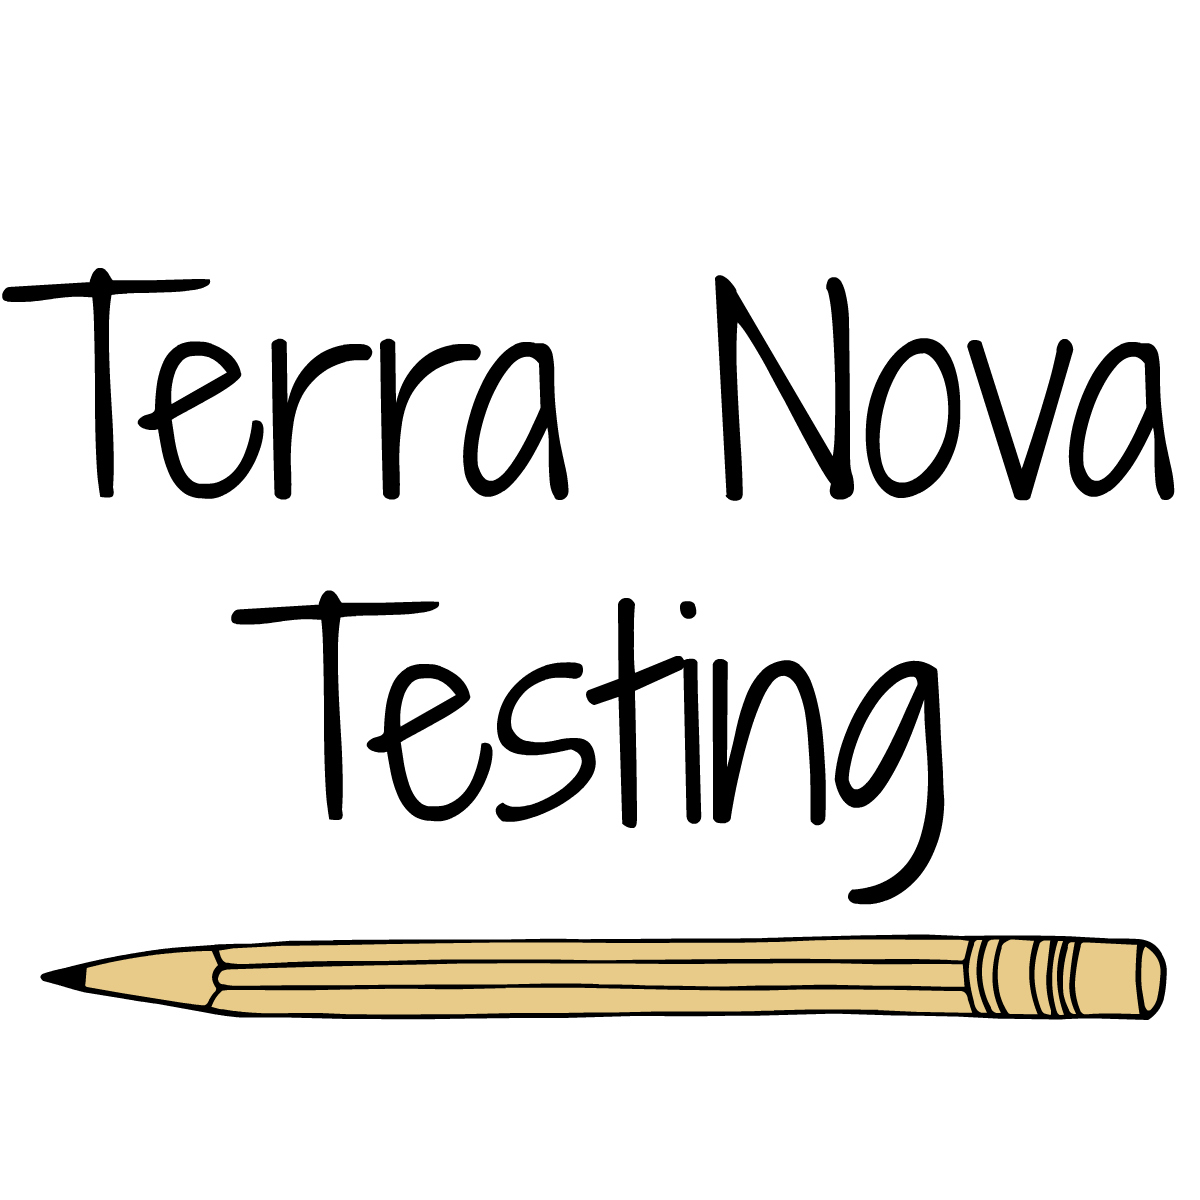 terra nova test scores interpretation